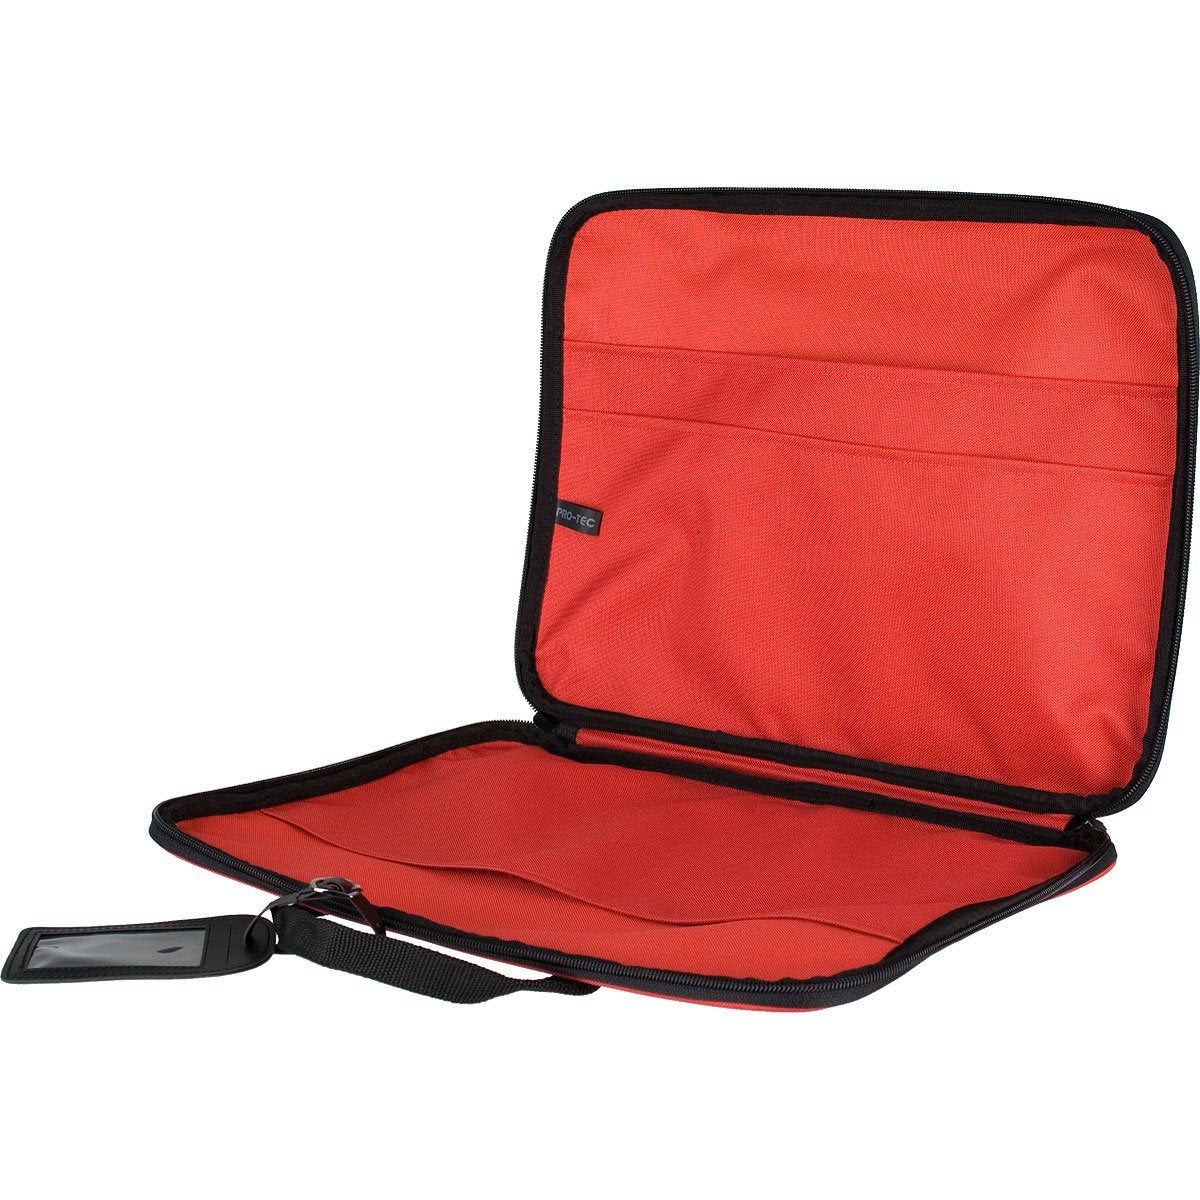 Protec Music Portfolio Bag with Shoulder Strap in RED